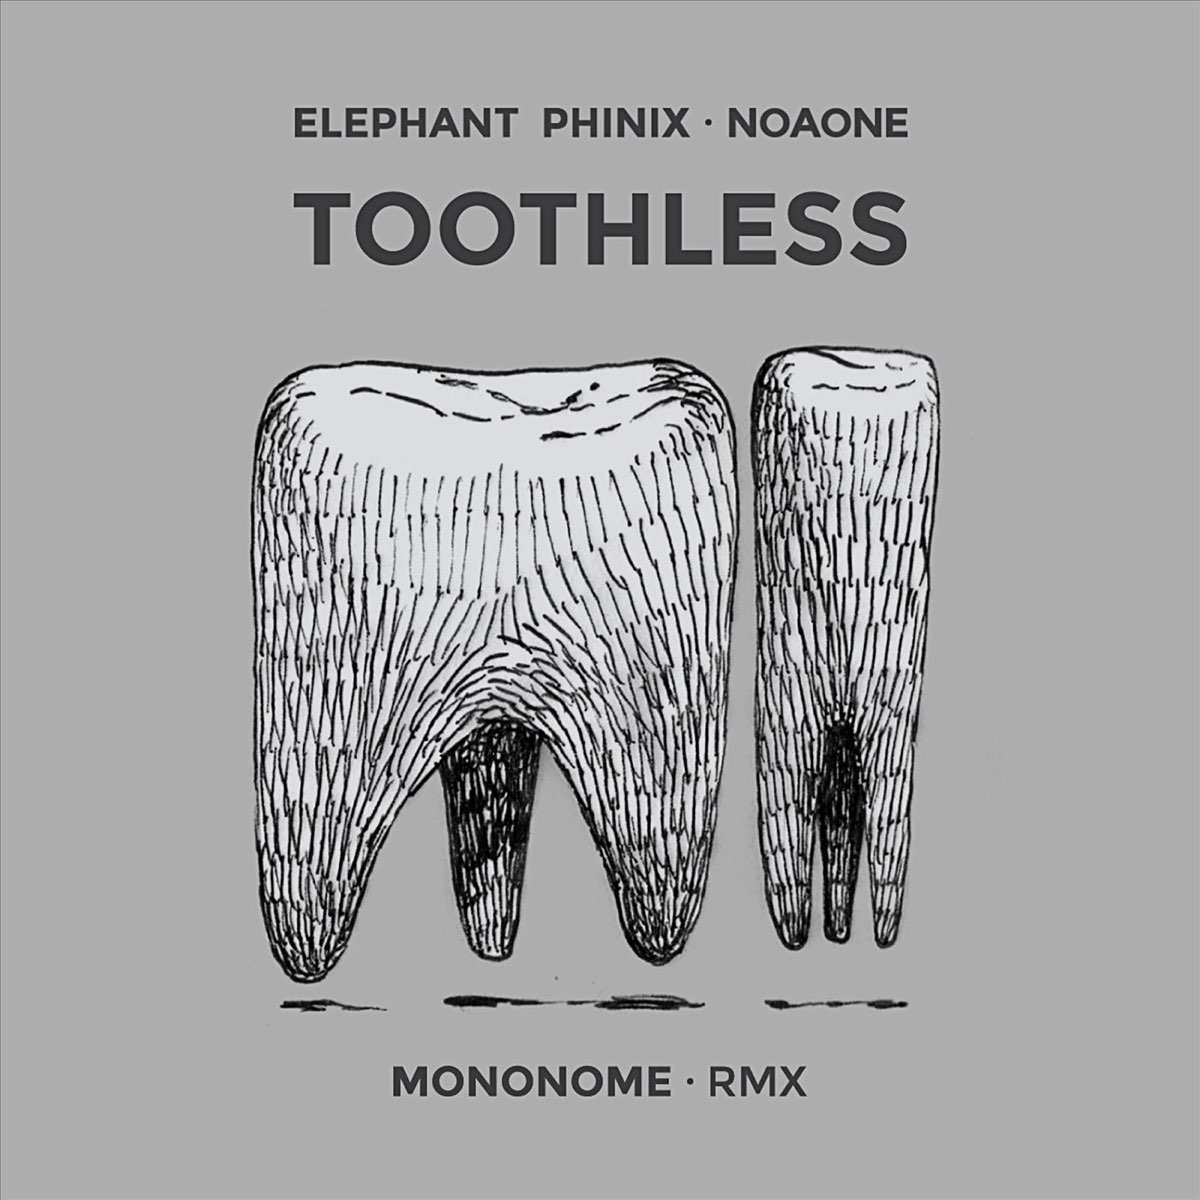 Elephant remix. Mononome.